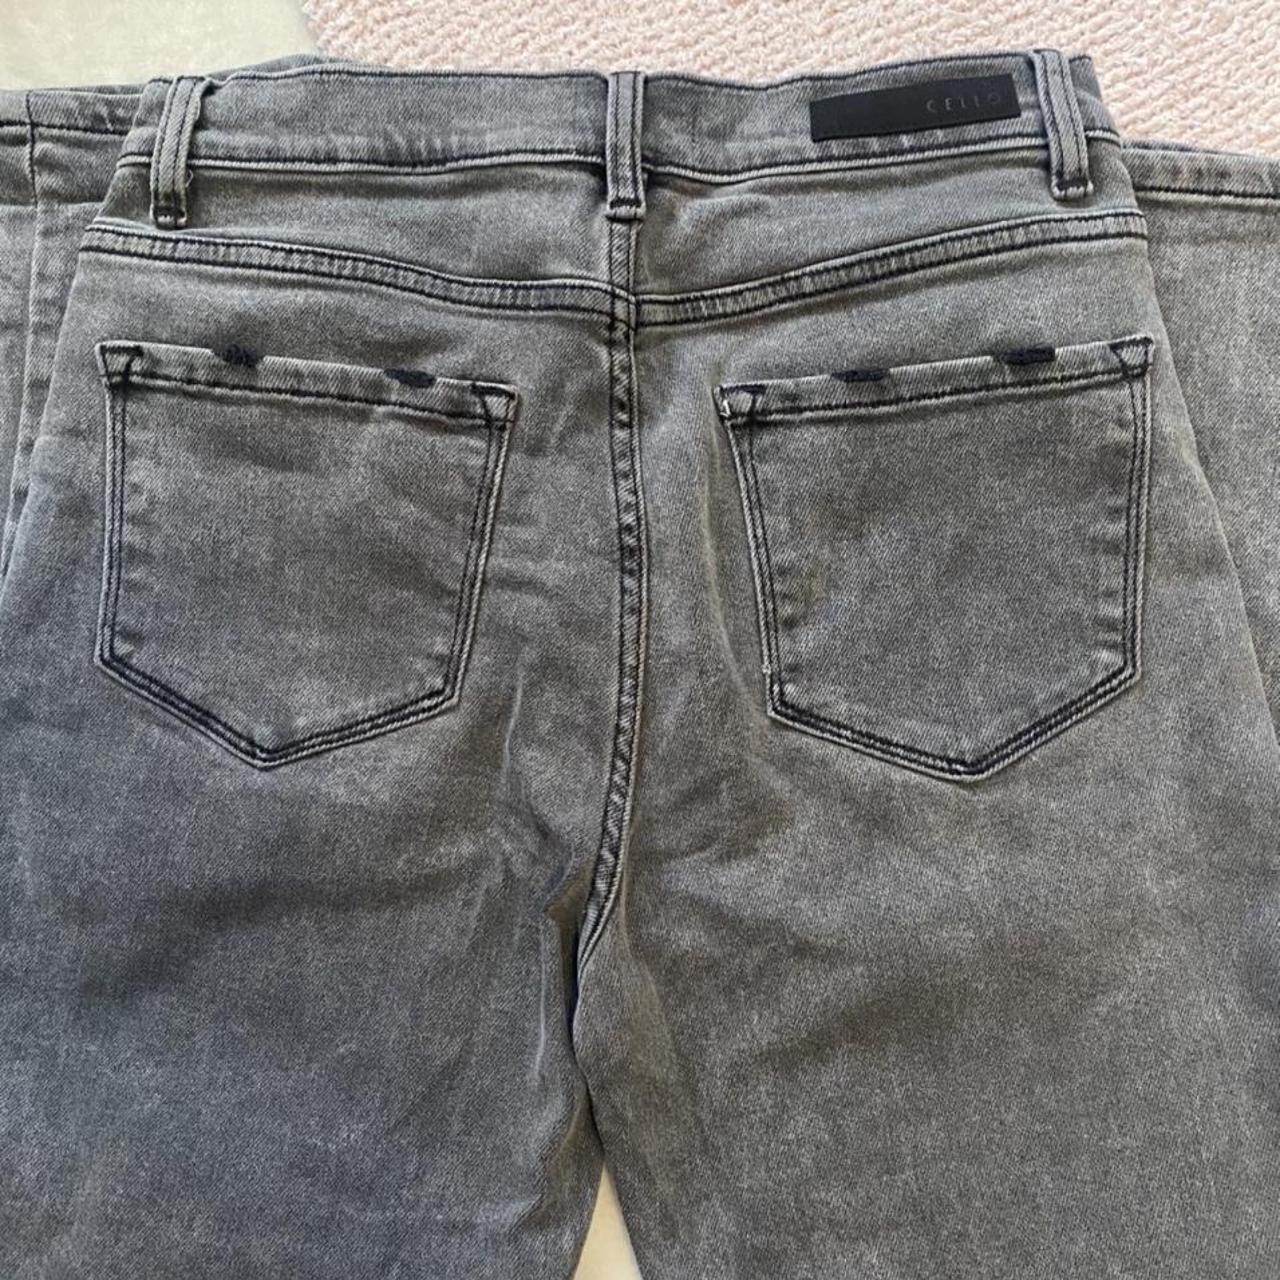 Product Image 2 - Straight leg grey denim jeans.